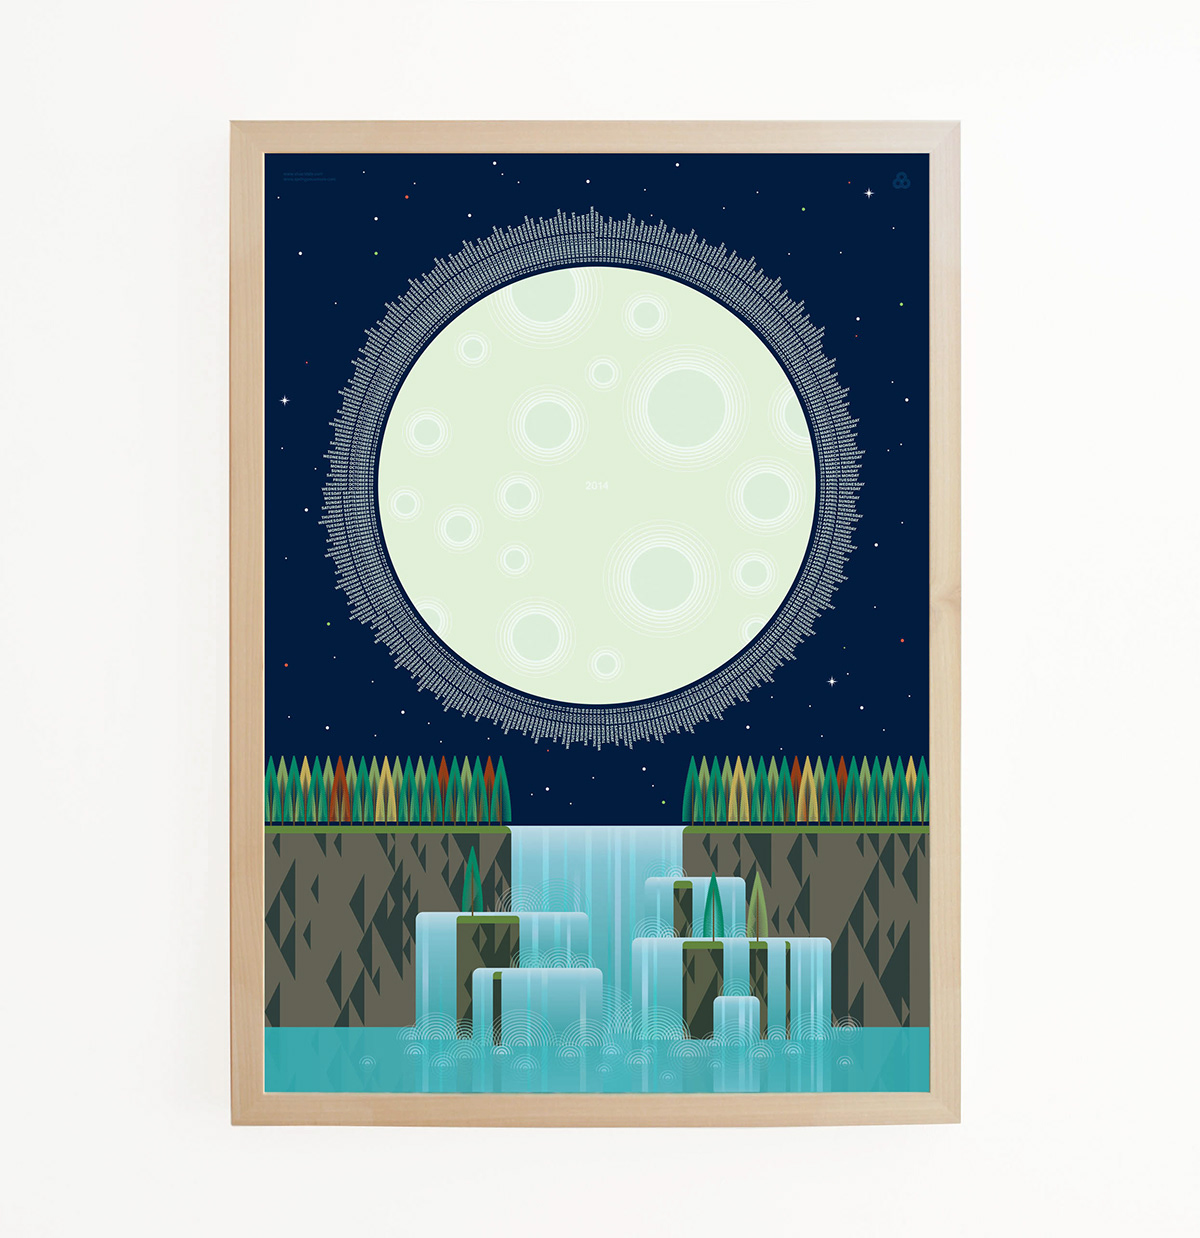 mid century calendar 2014 Calendar print spring once more Stuart Daly Sun poster swiss moon water waterfall trees modern